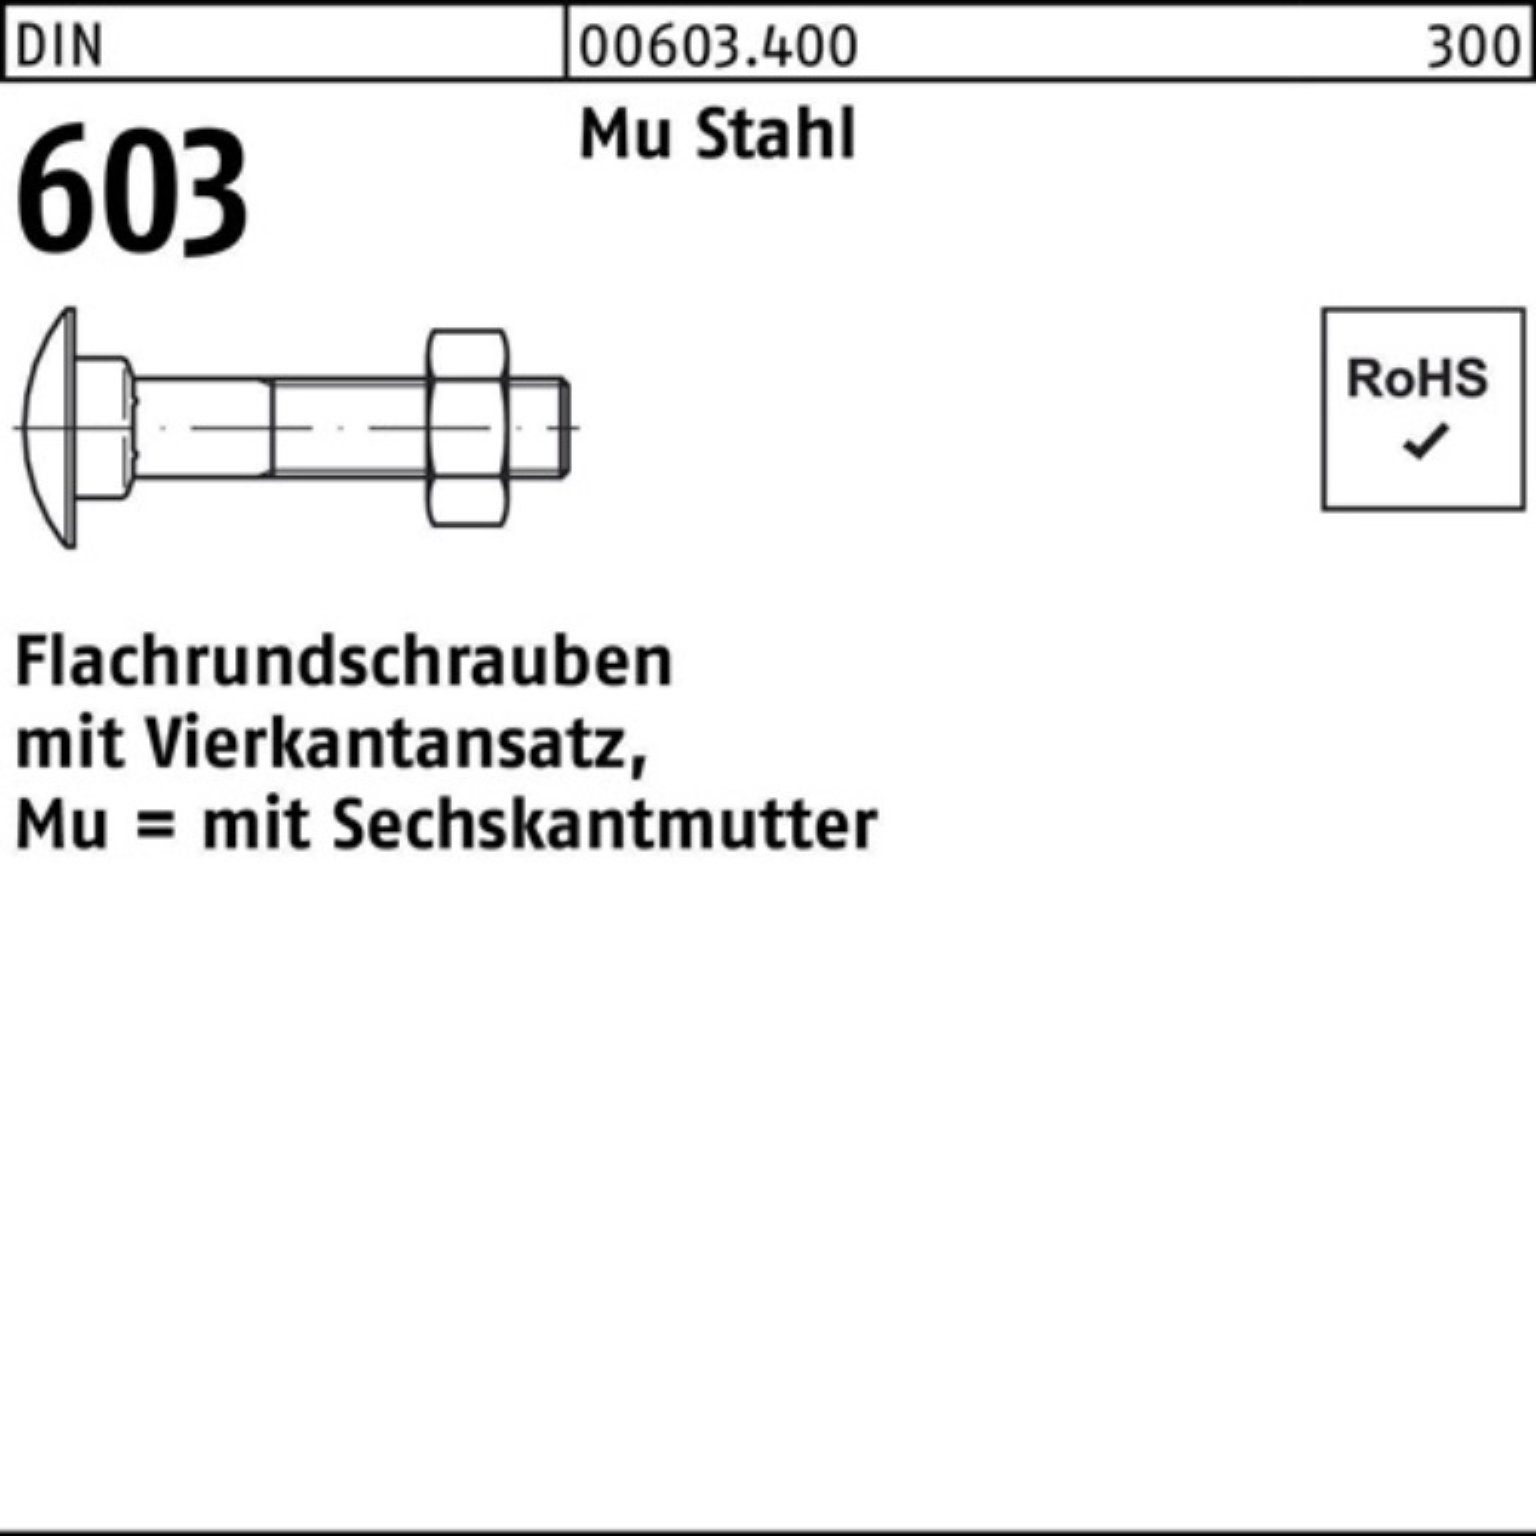 M 603 Vierkantansatz/6-ktmutter Reyher Muttern Flachrundschraube M8x45 Pack DIN 200er